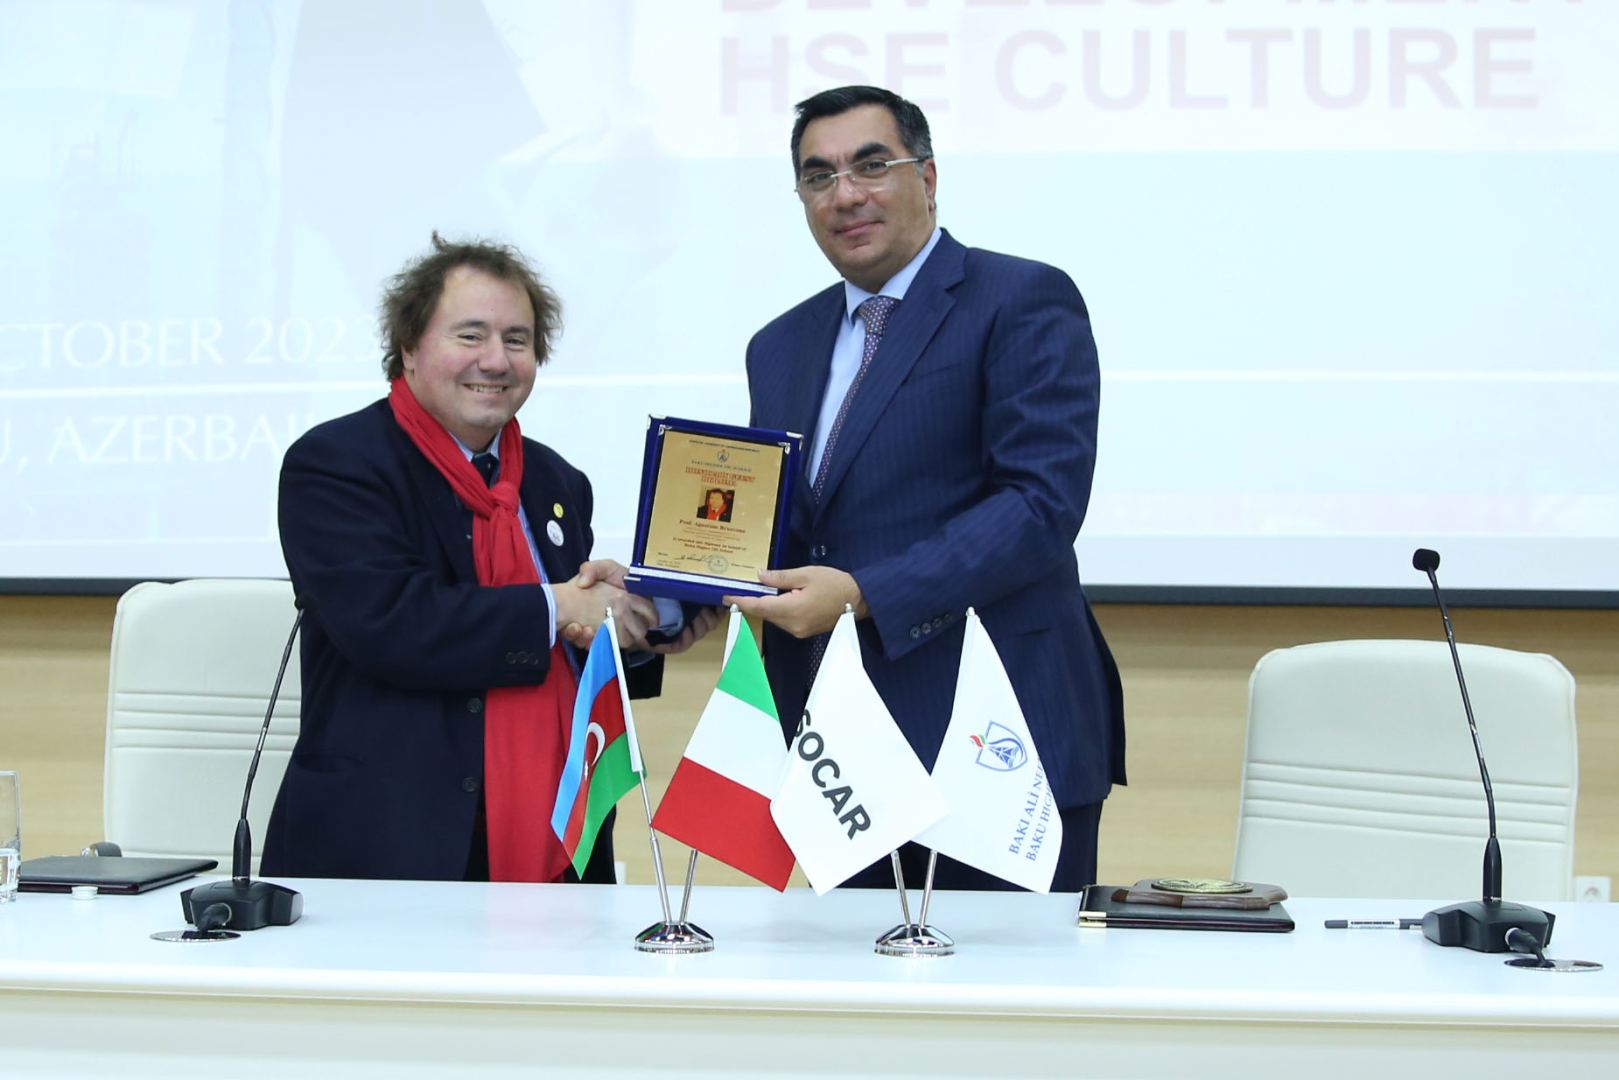 Baku Higher Oil School to cooperate with Italian University of Genoa (PHOTO)